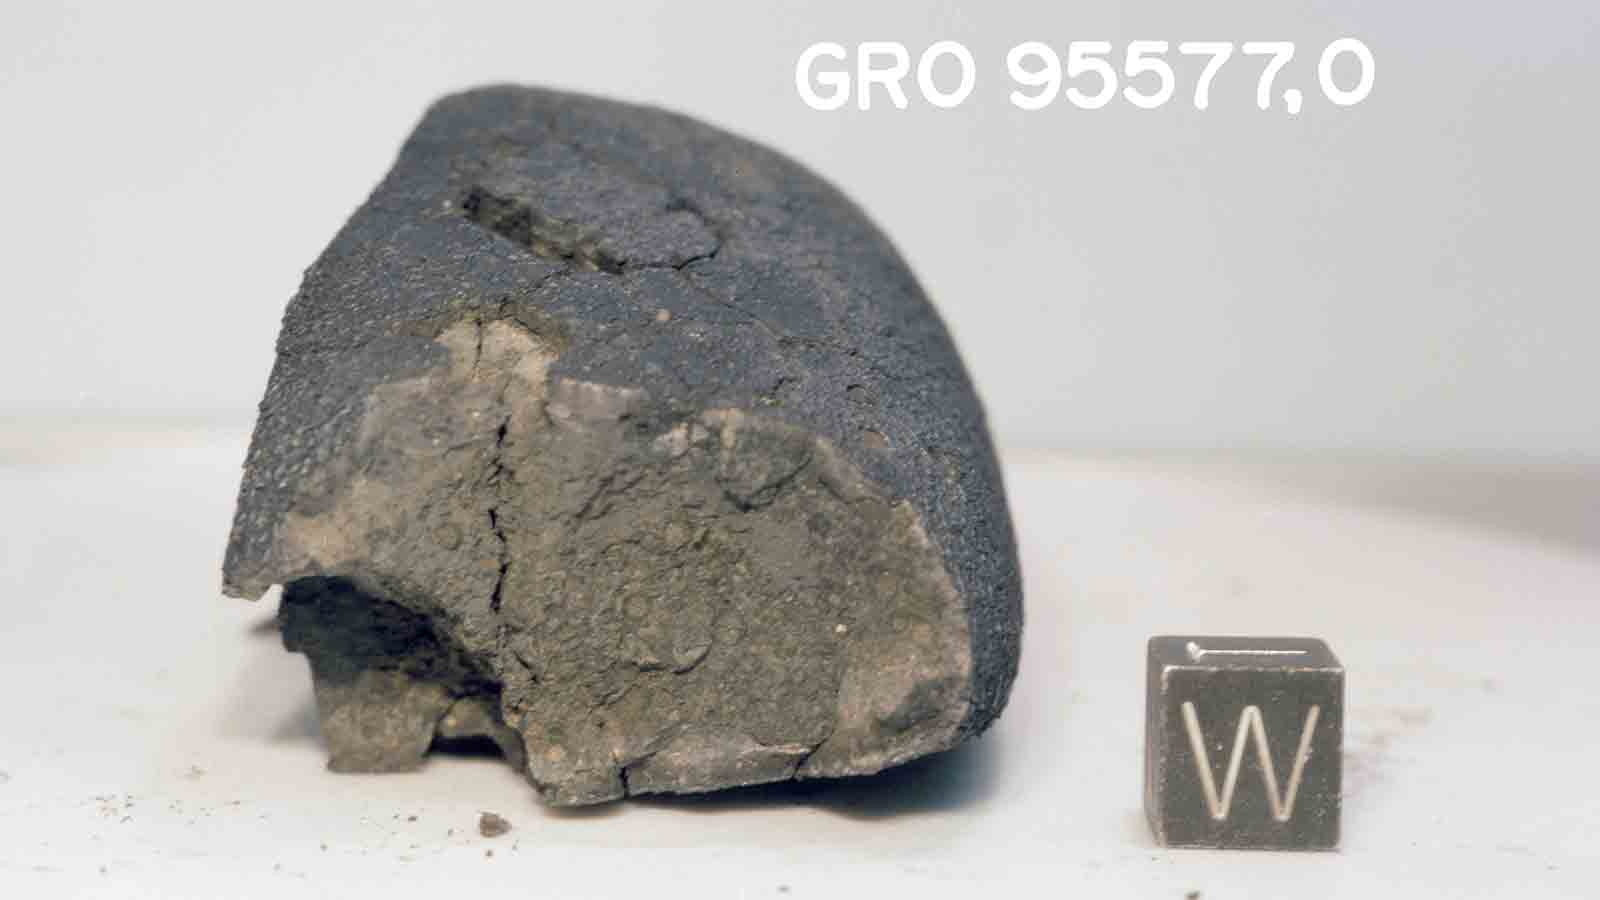 C3 - Taller de meteoritos